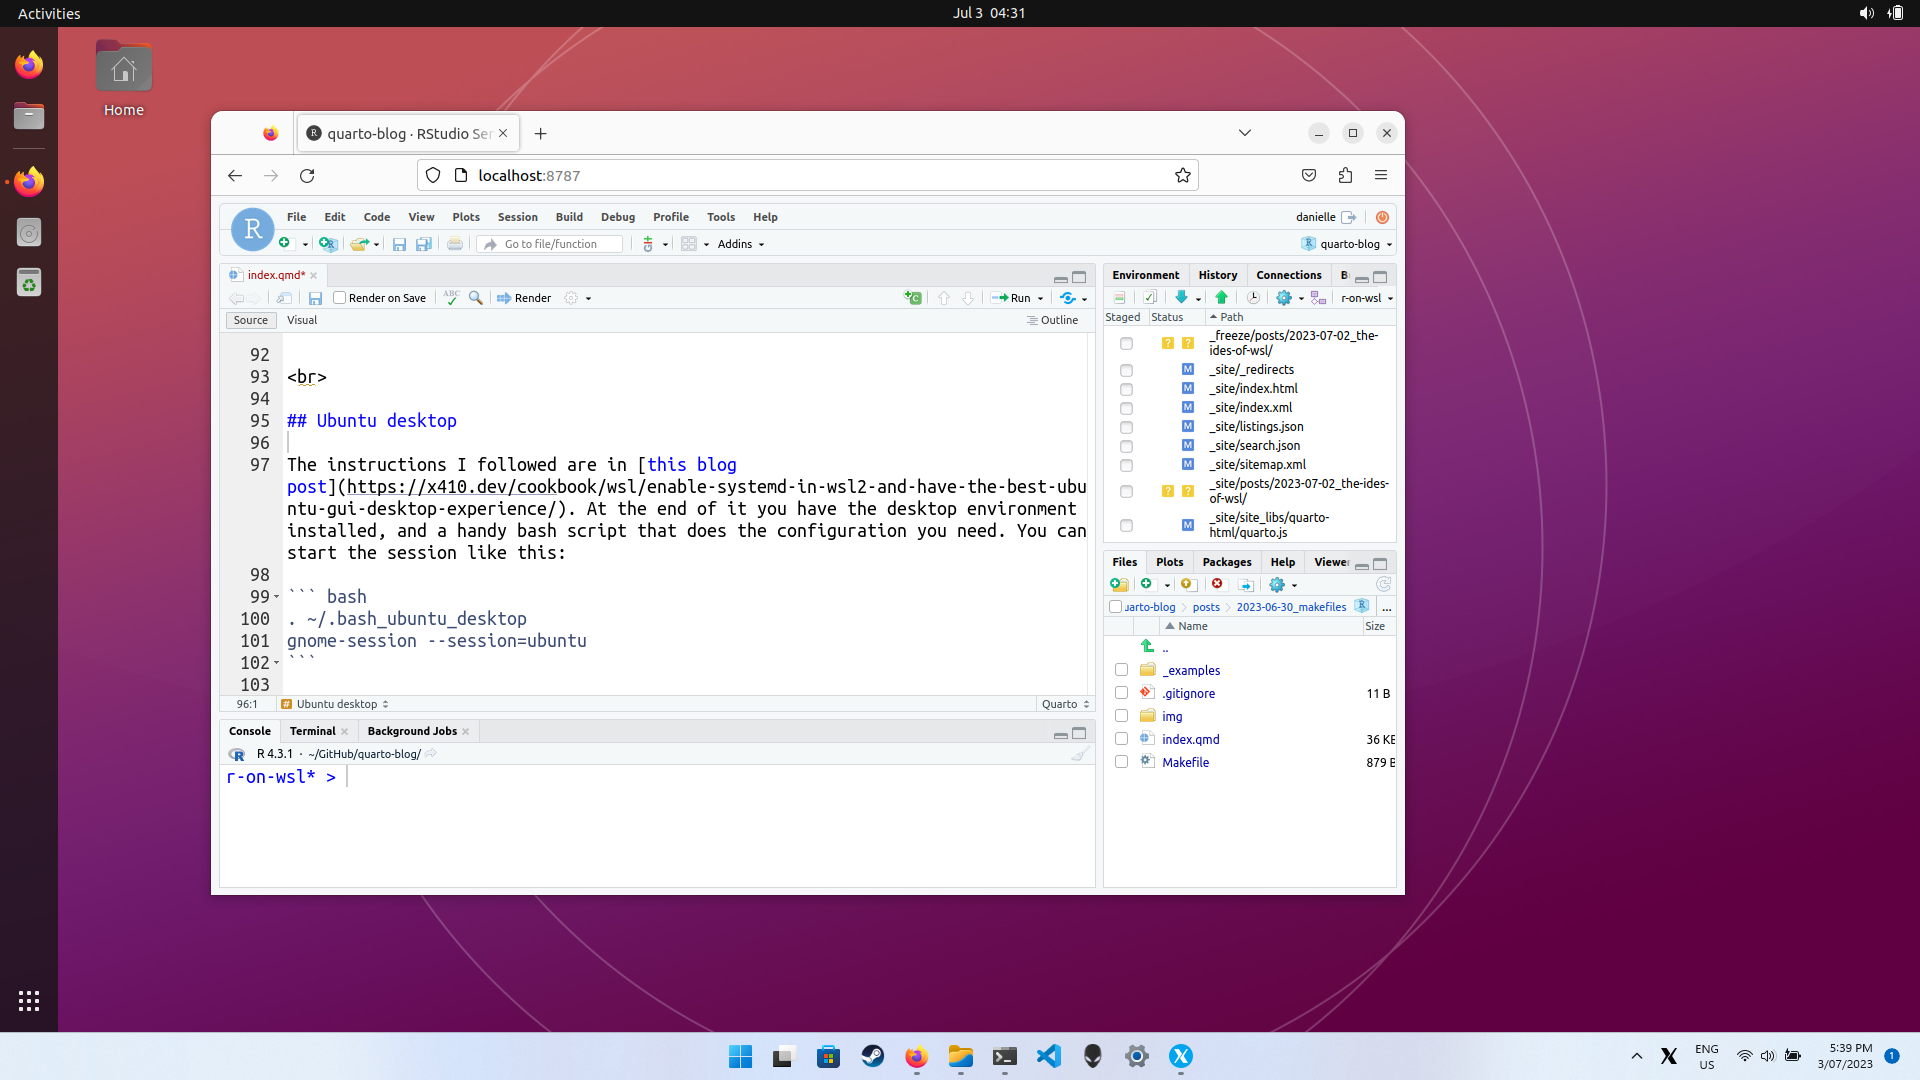 RStudio running in a browser. The browser window is within an Ubuntu desktop. The Ubuntu desktop floats above the Windows taskbar.